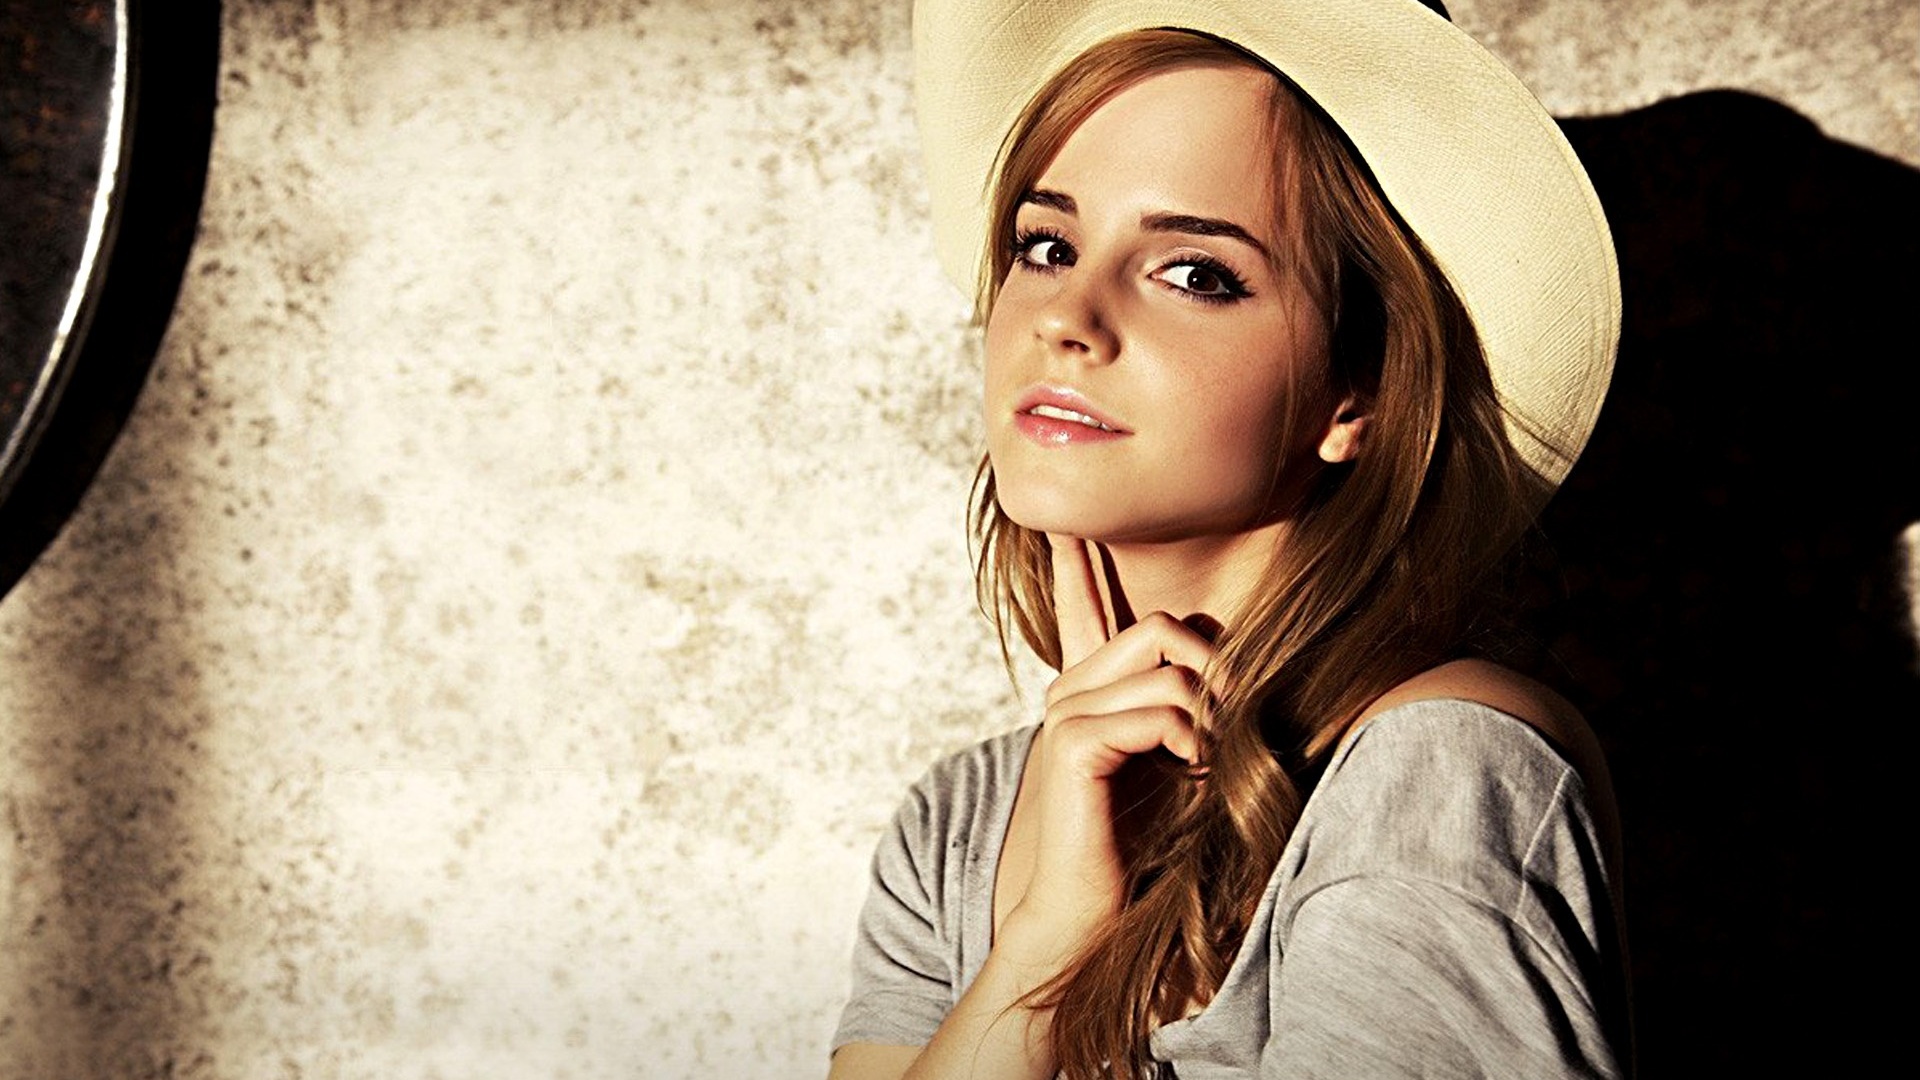 Emma Watson Wallpaper High Resolution And Quality